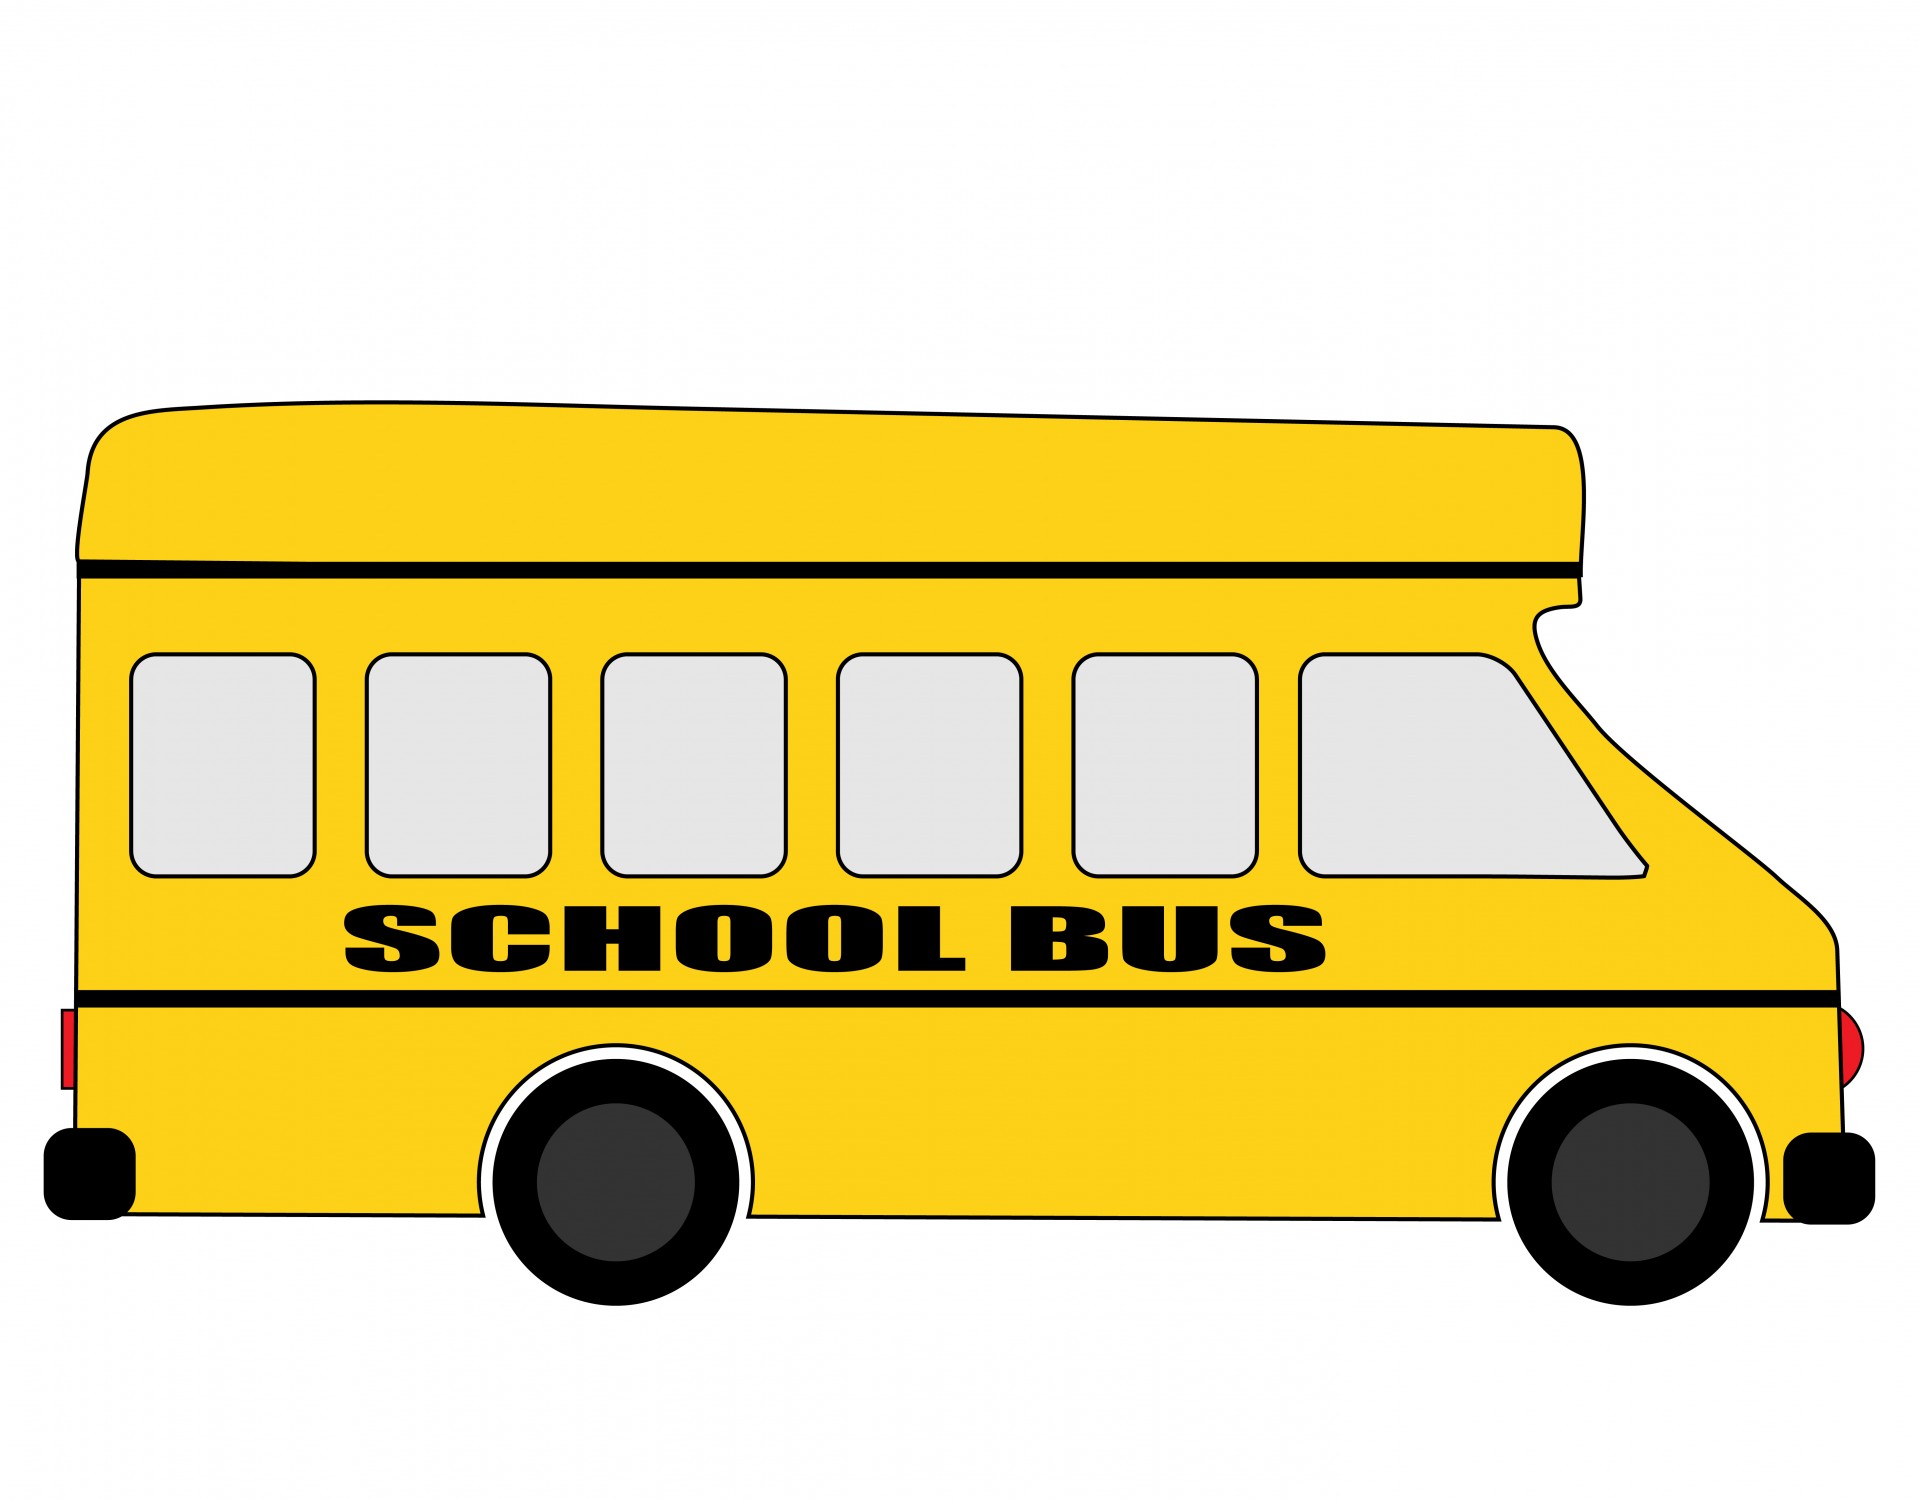 Cute school bus clip art free - Free School Bus Clipart